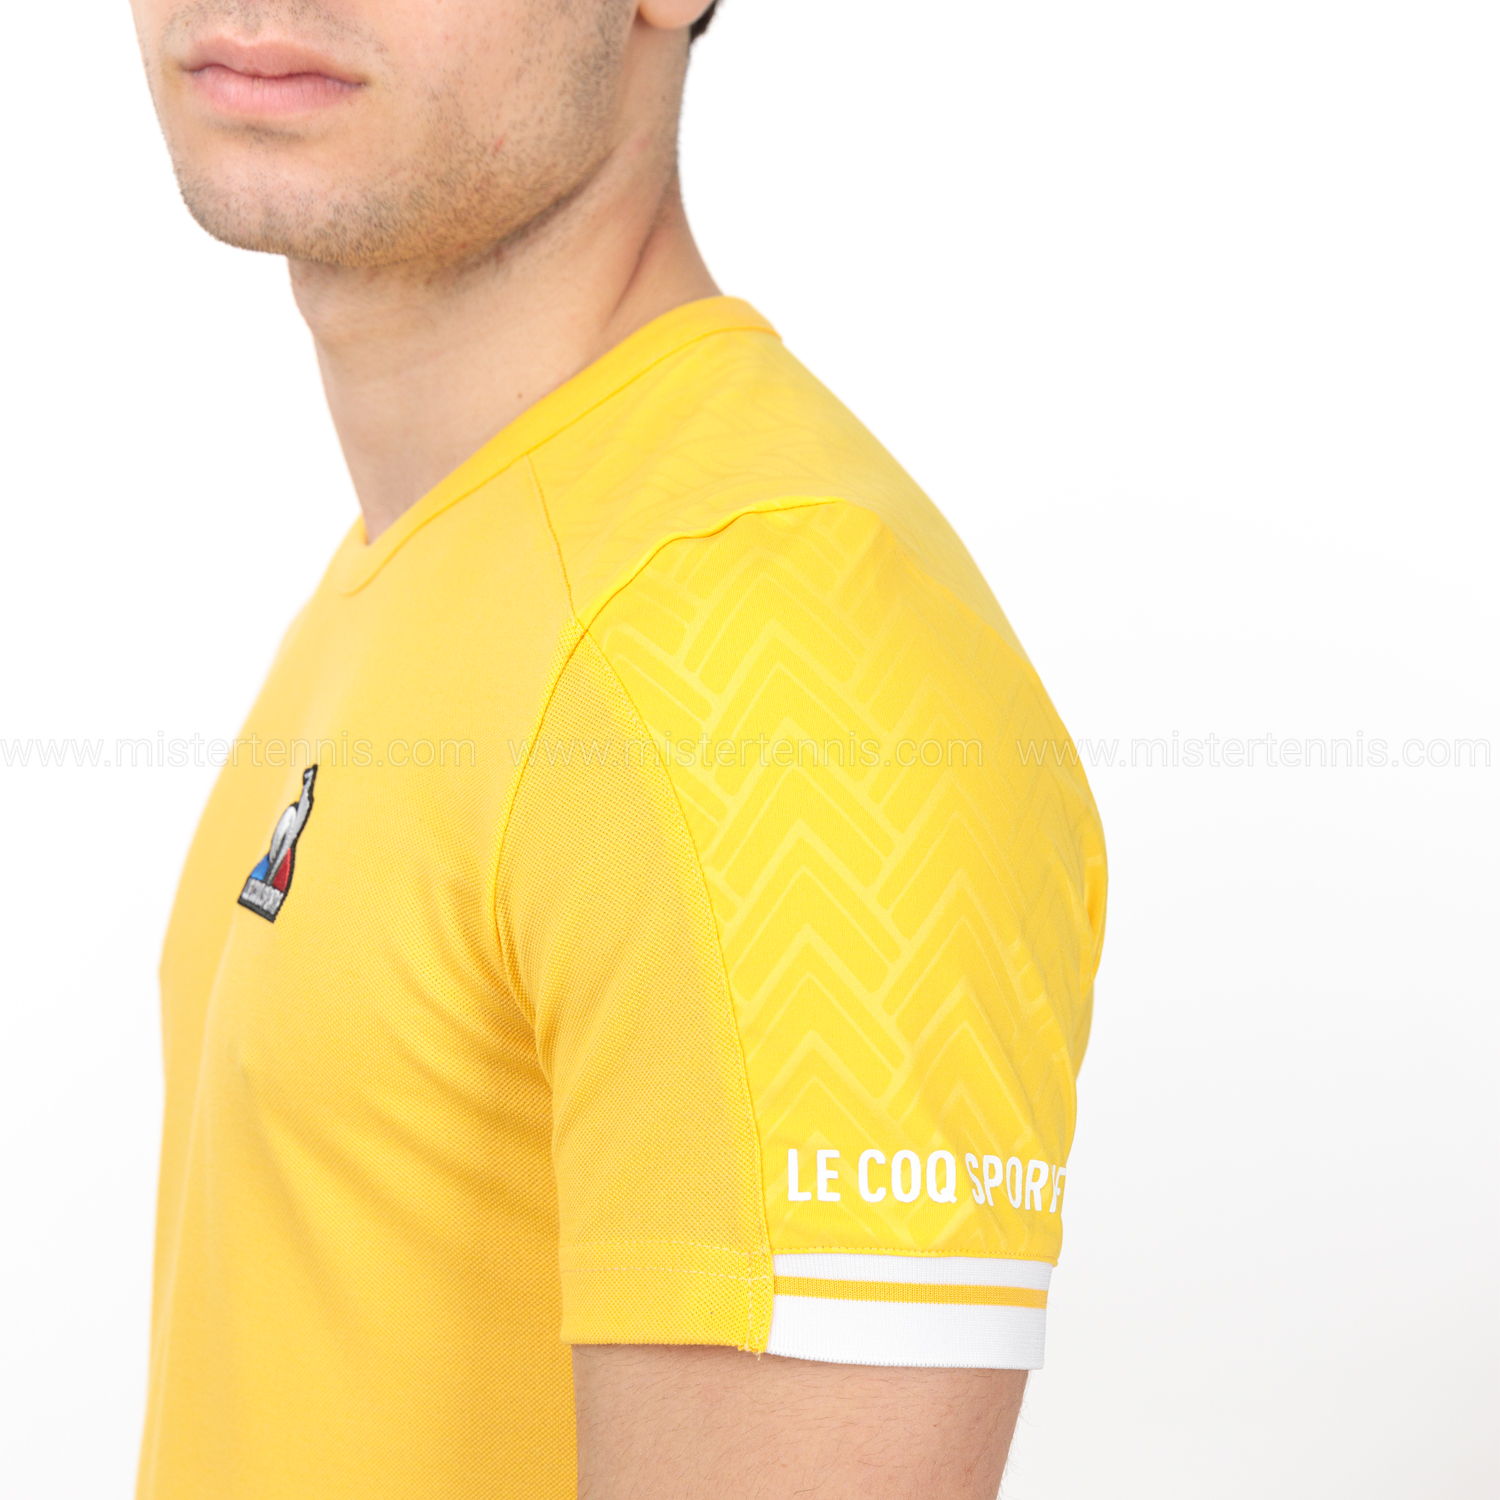 Le Coq Sportif Performance Match Maglietta - Lemon Chrome